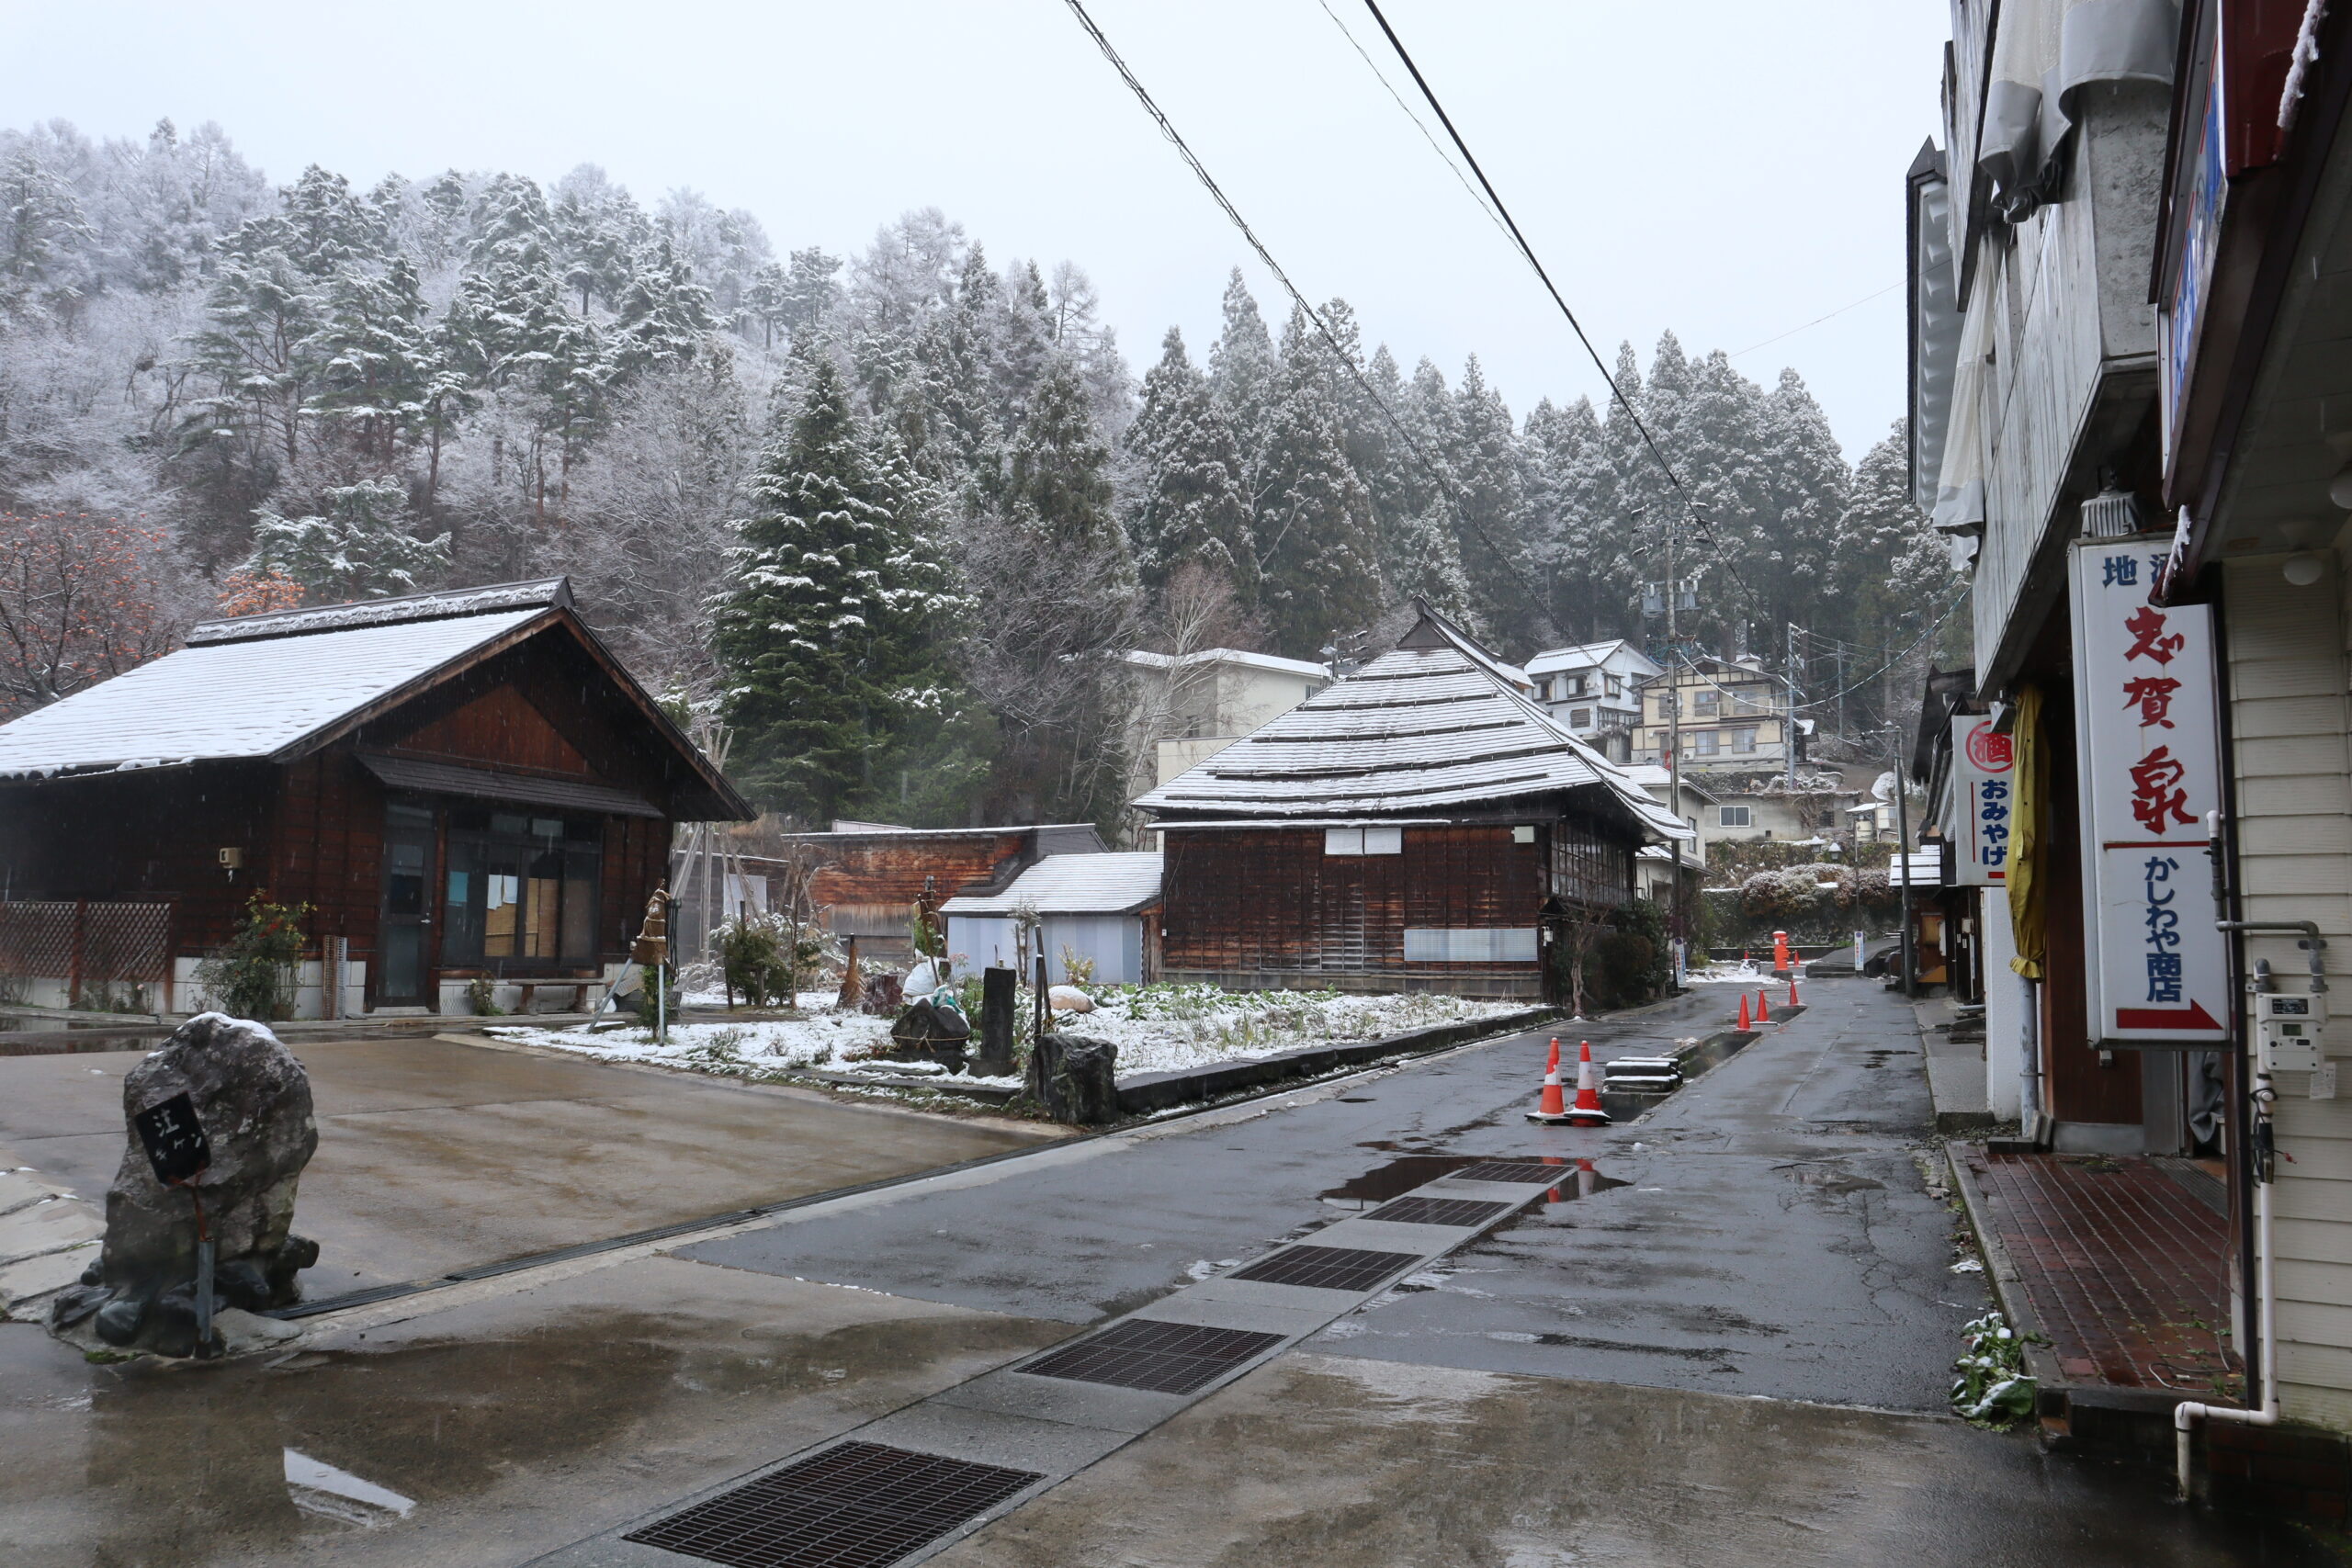 First snow Nozawa Onsen village sees this winter.